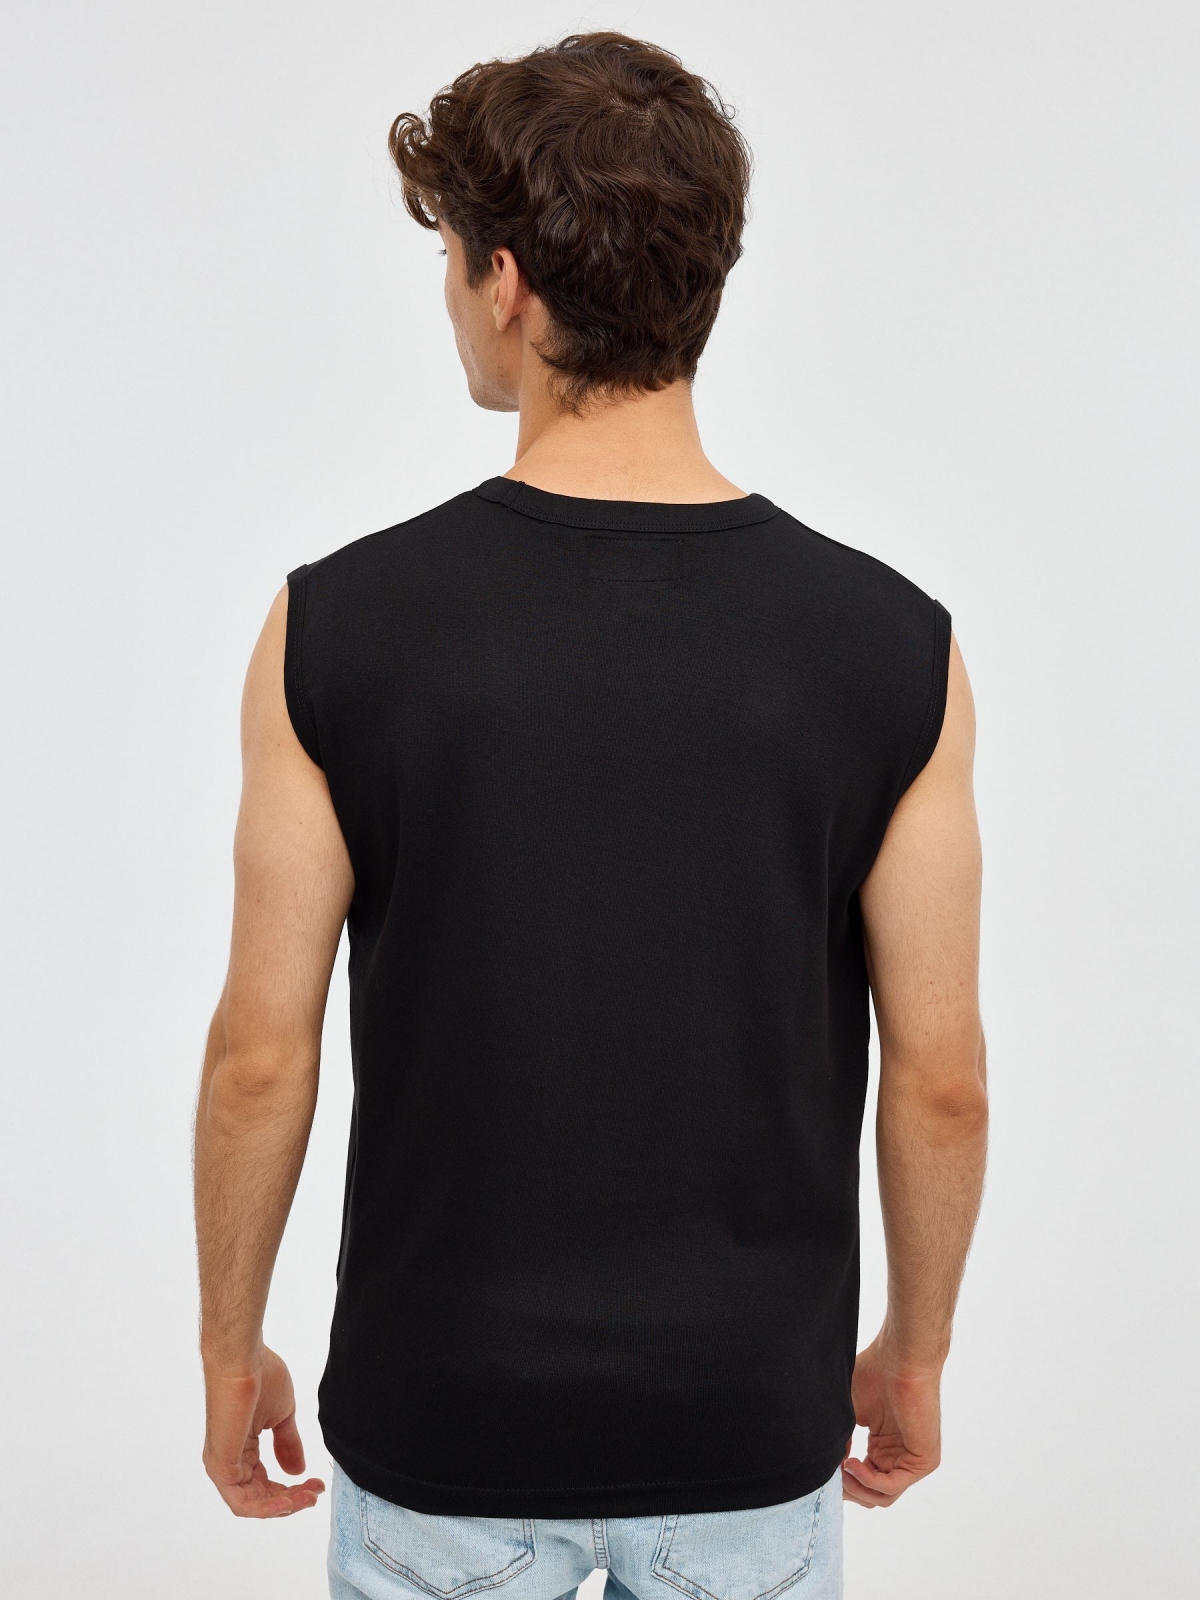 Camiseta básica sin mangas negro vista media trasera